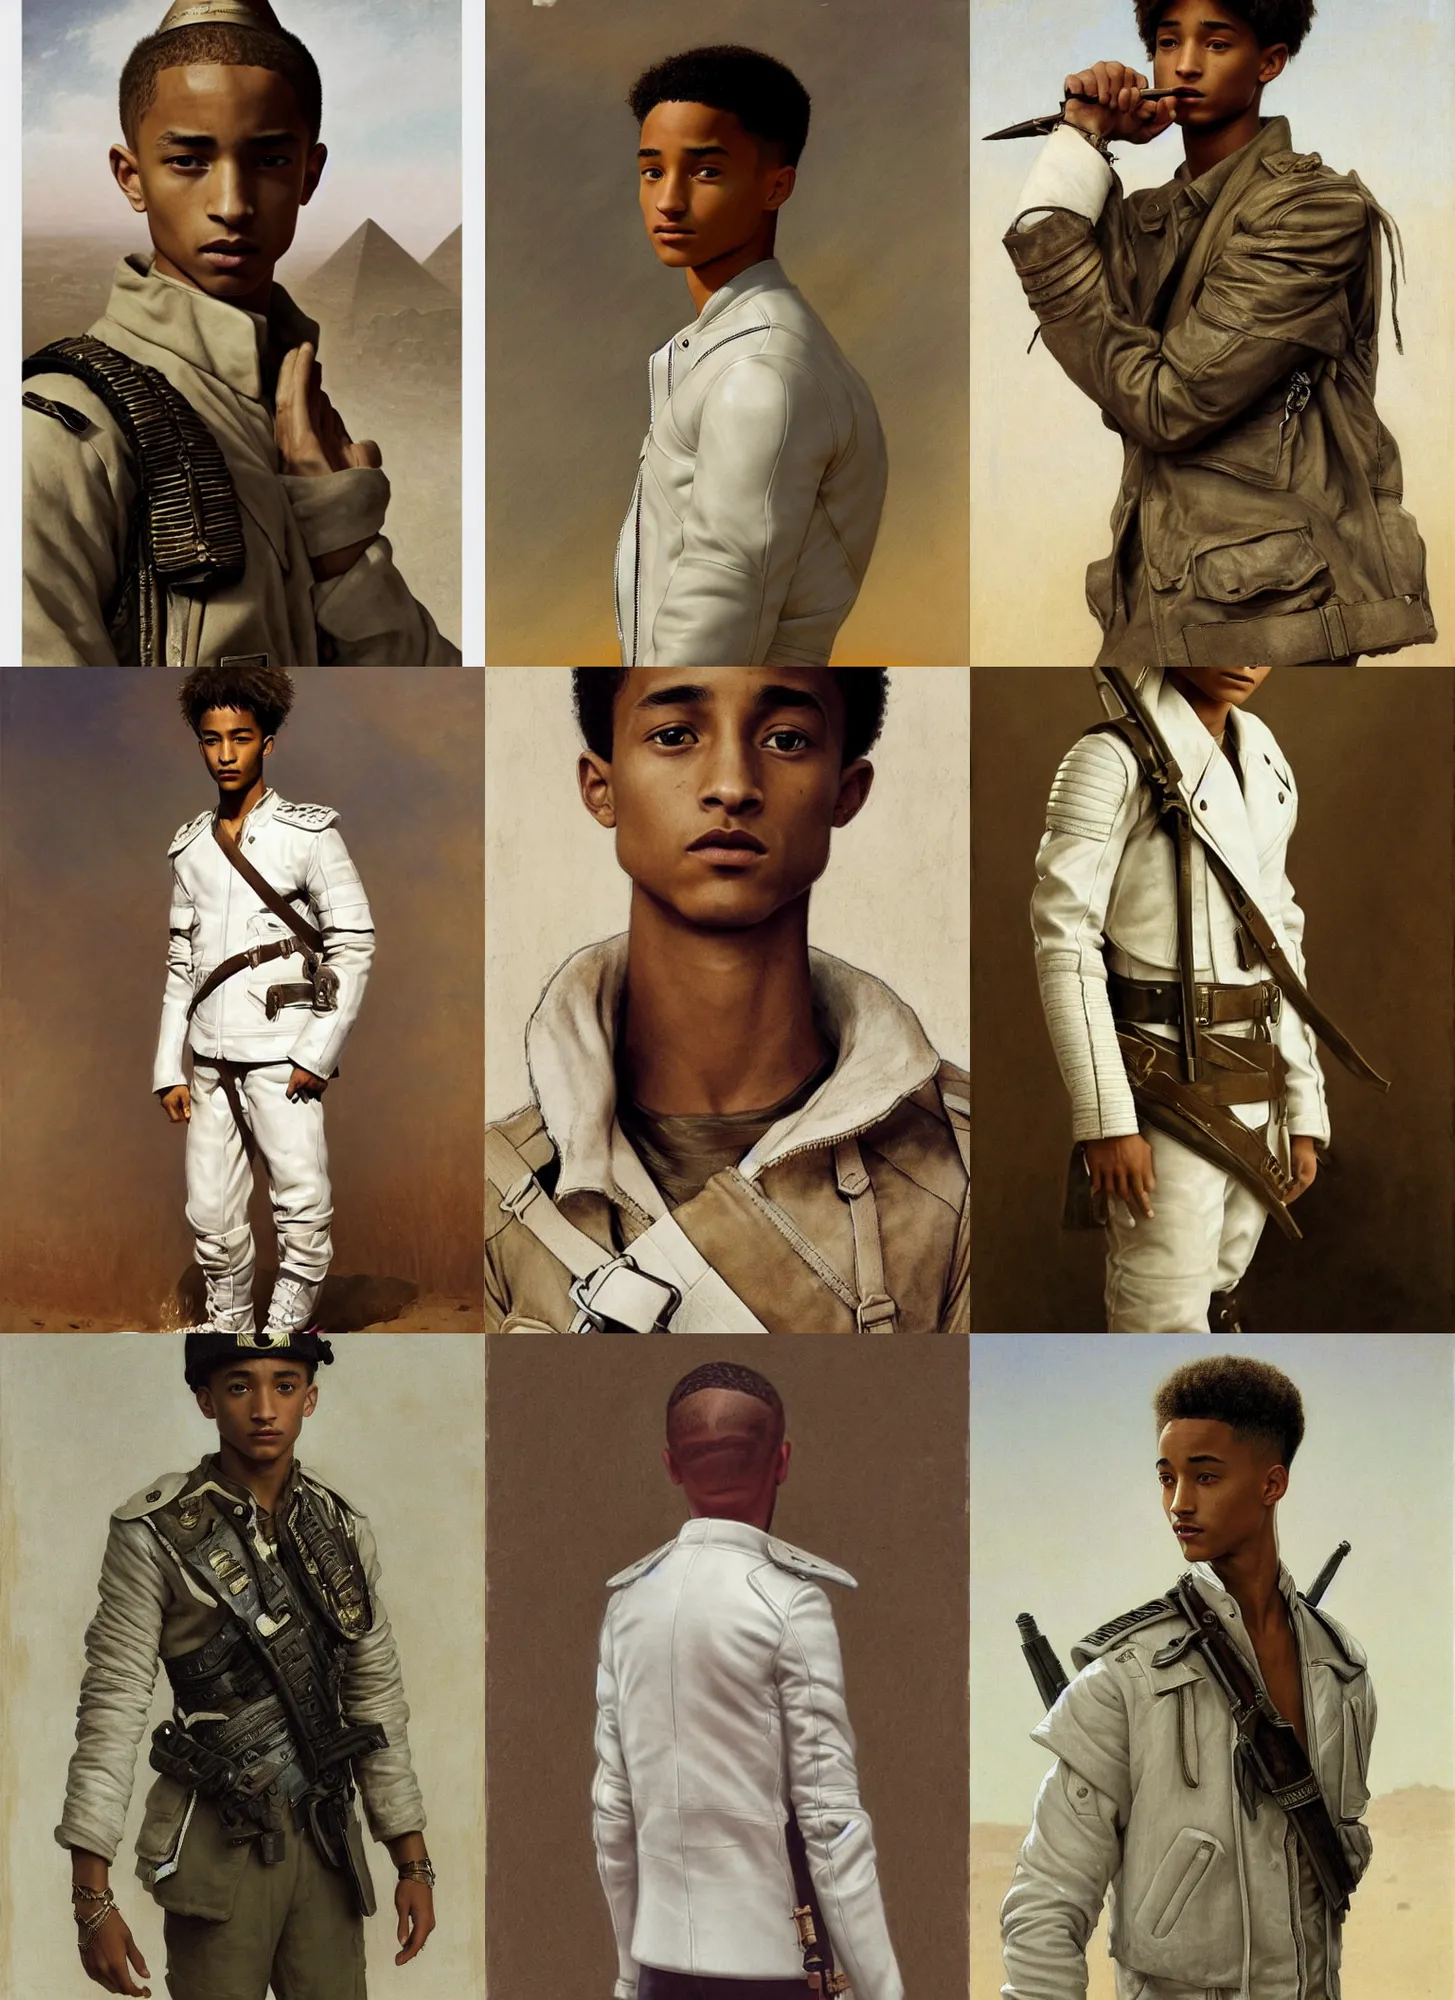 Prompt: jaden smith as young egyptian soldier, white leather jacket, shaved head, intricate, sharp focus, illustration, orientalism, bouguereau, rutkowski, jurgens